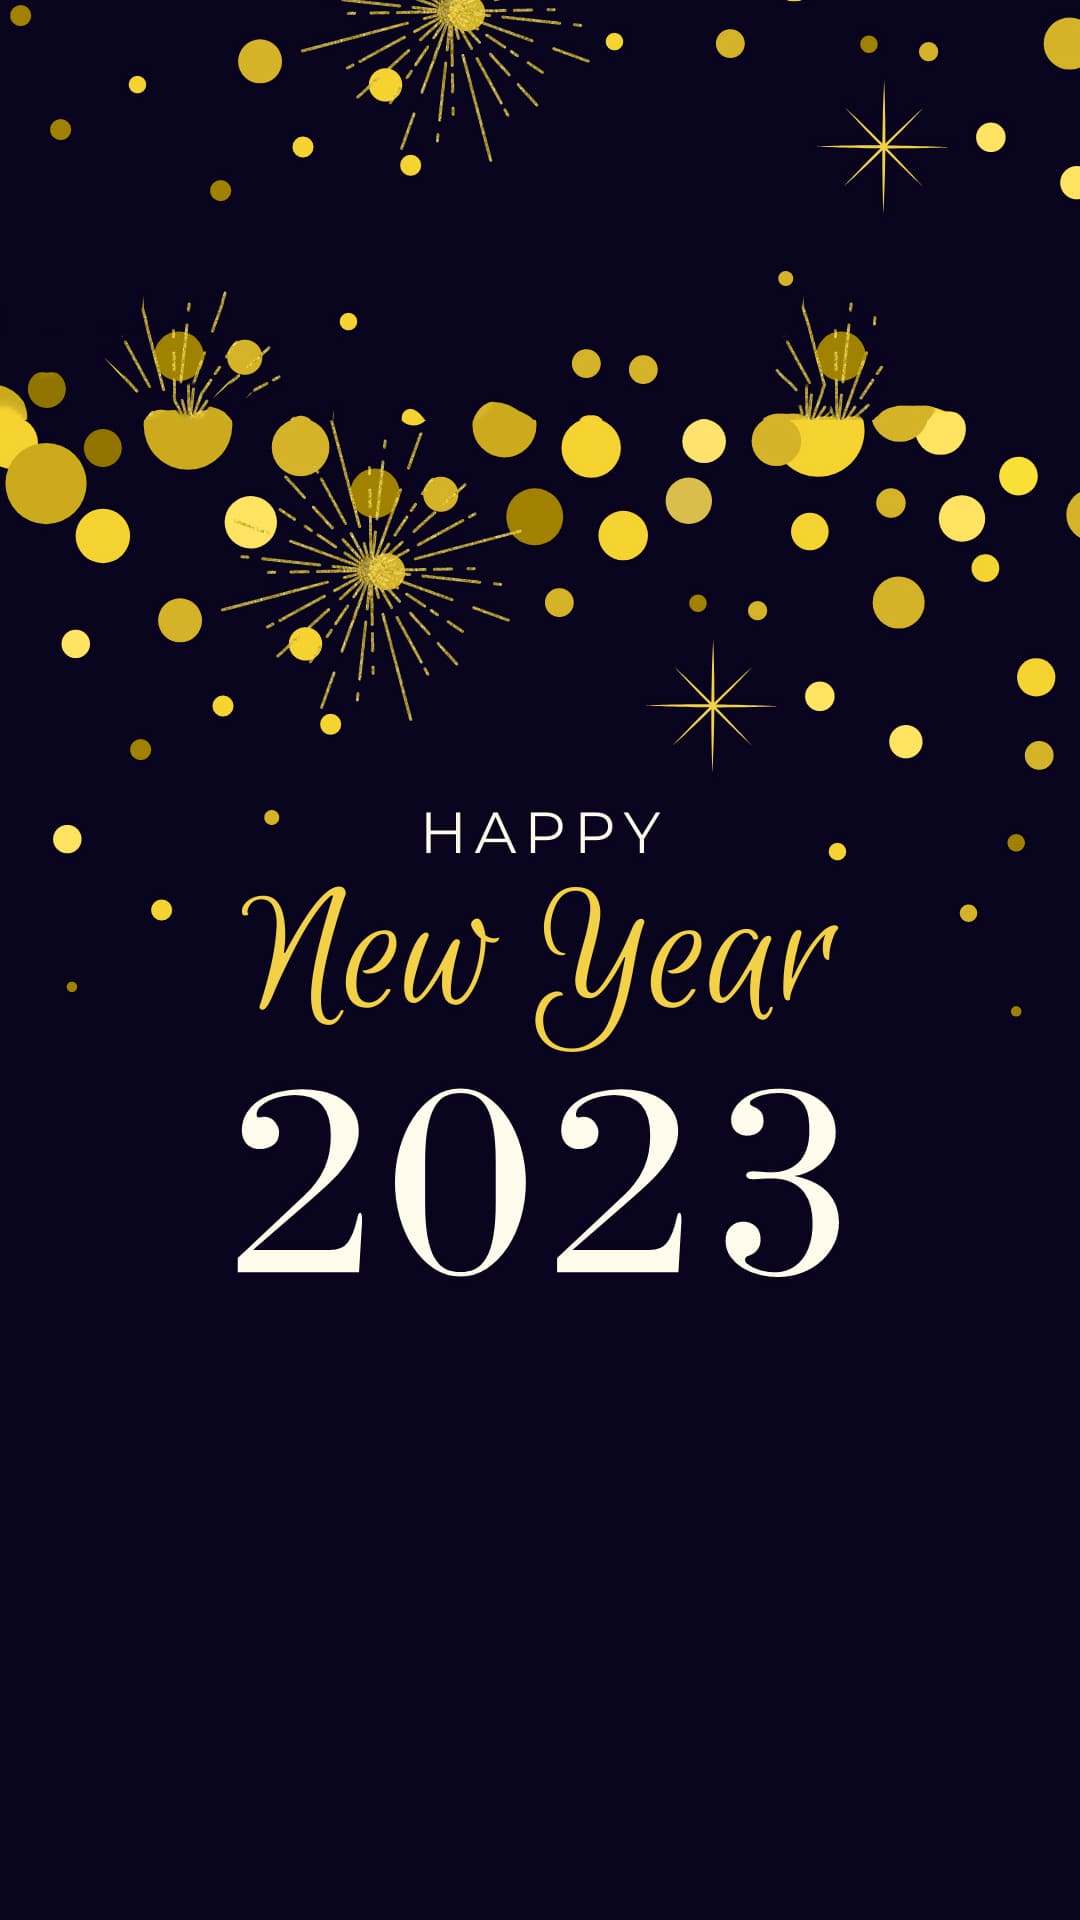  Happy New Year 2023 wallpaper Editing CB Background  KREditings